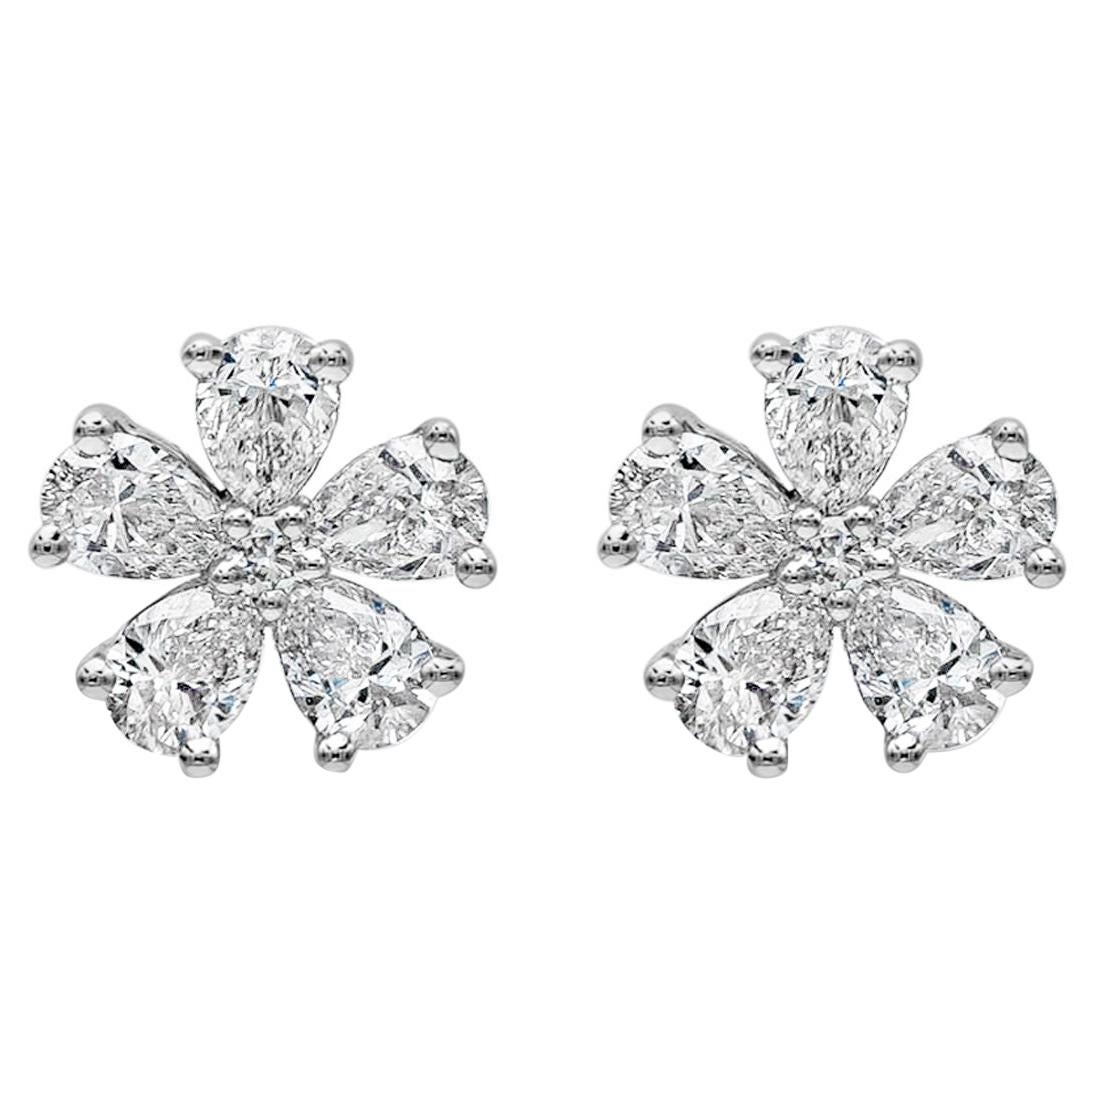 Roman Malakov 1.49 Carats Total Pear Shape Diamond Flower Cluster Stud Earrings